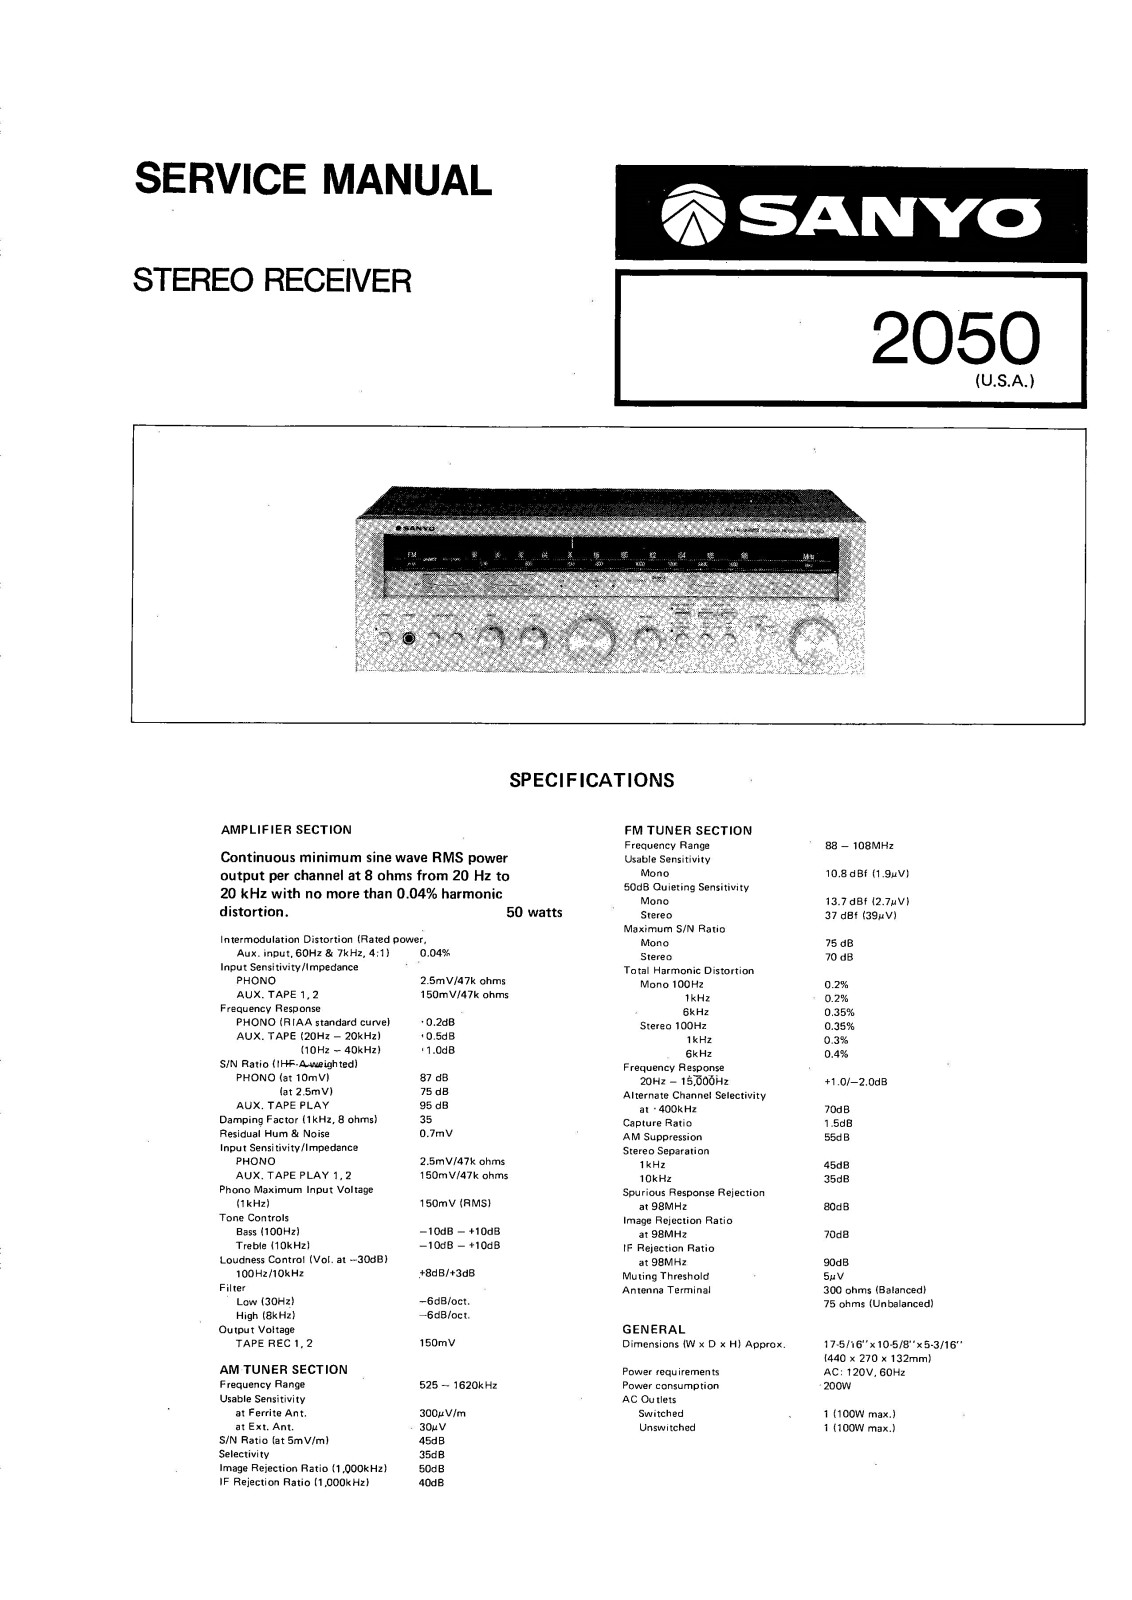 Sanyo 2050 Service Manual